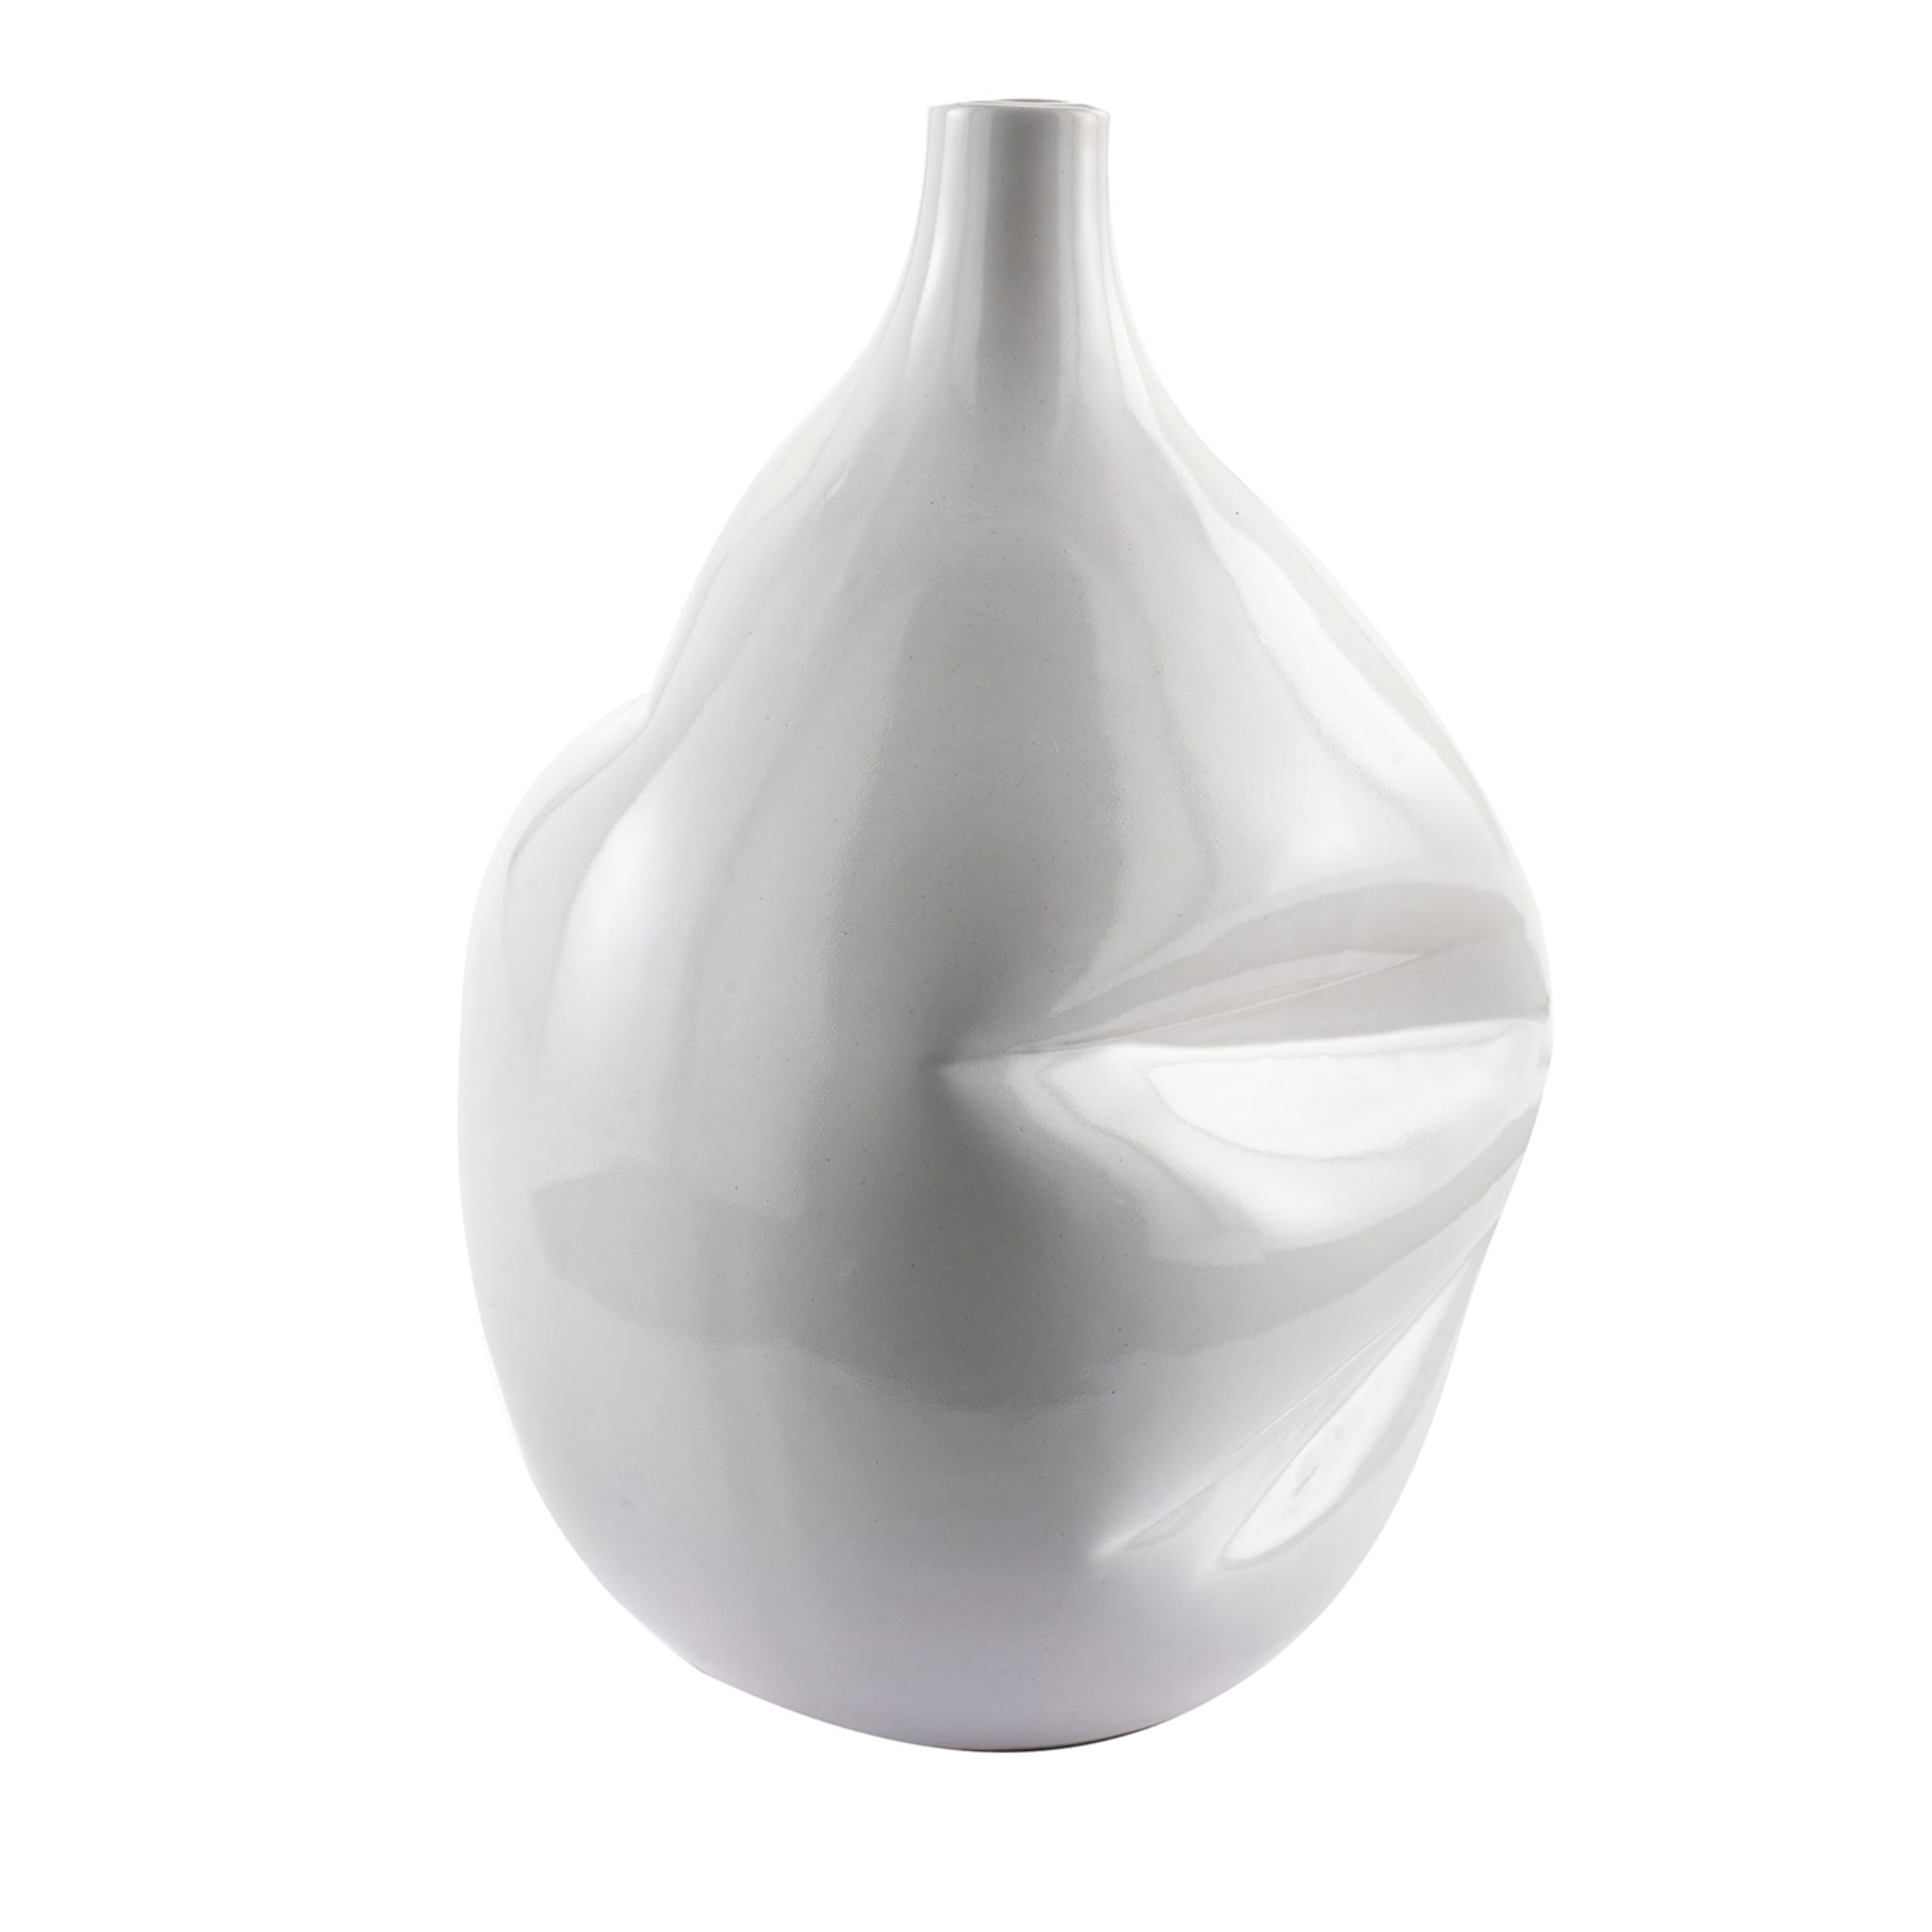 Scar White Vase - Alternative view 1